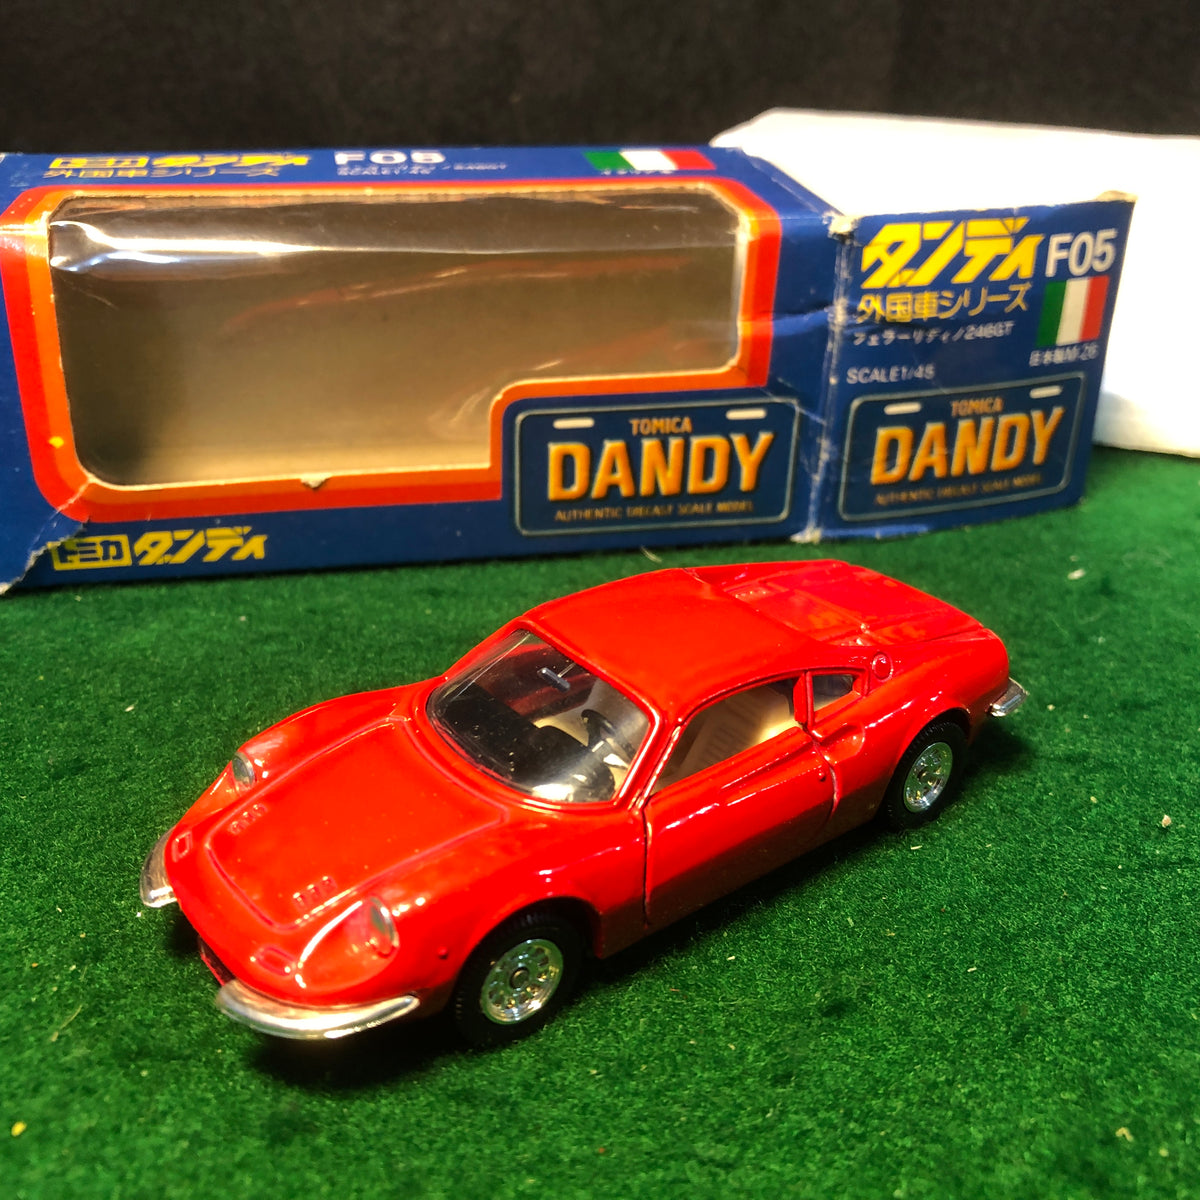 Ferrari 246 GT Dino Red by Tomica Dandy 1:43 (F05) – Albaco